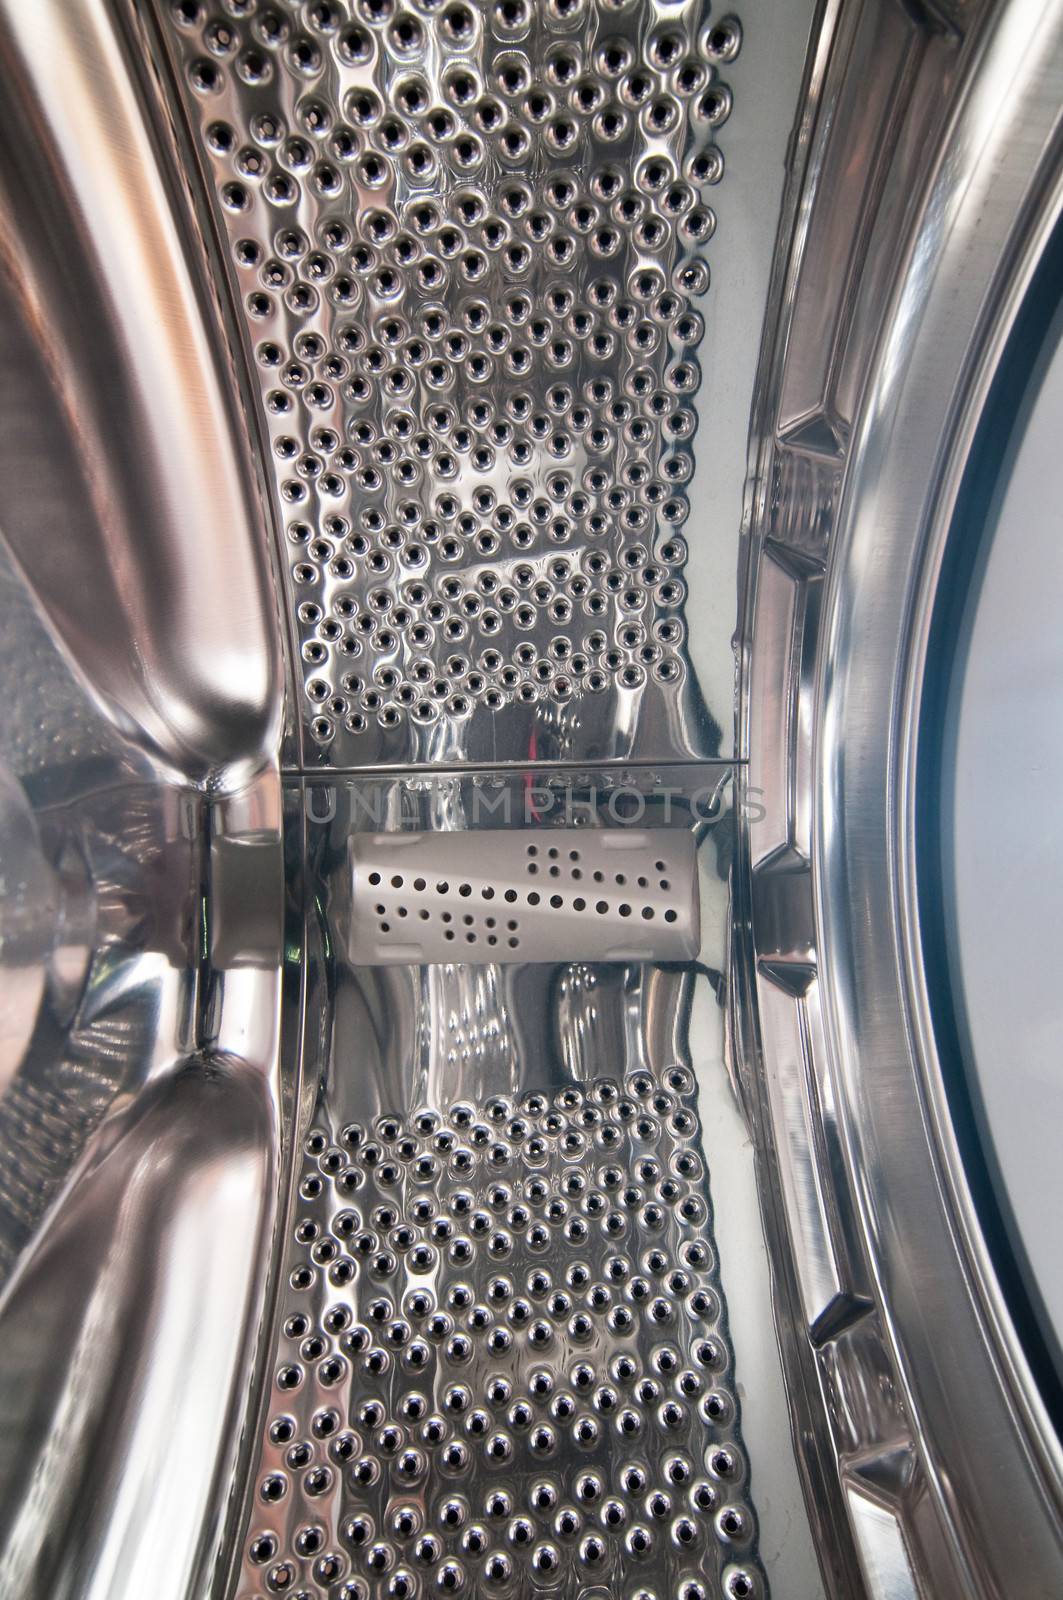 Interior view of a washing machine drum by lexan